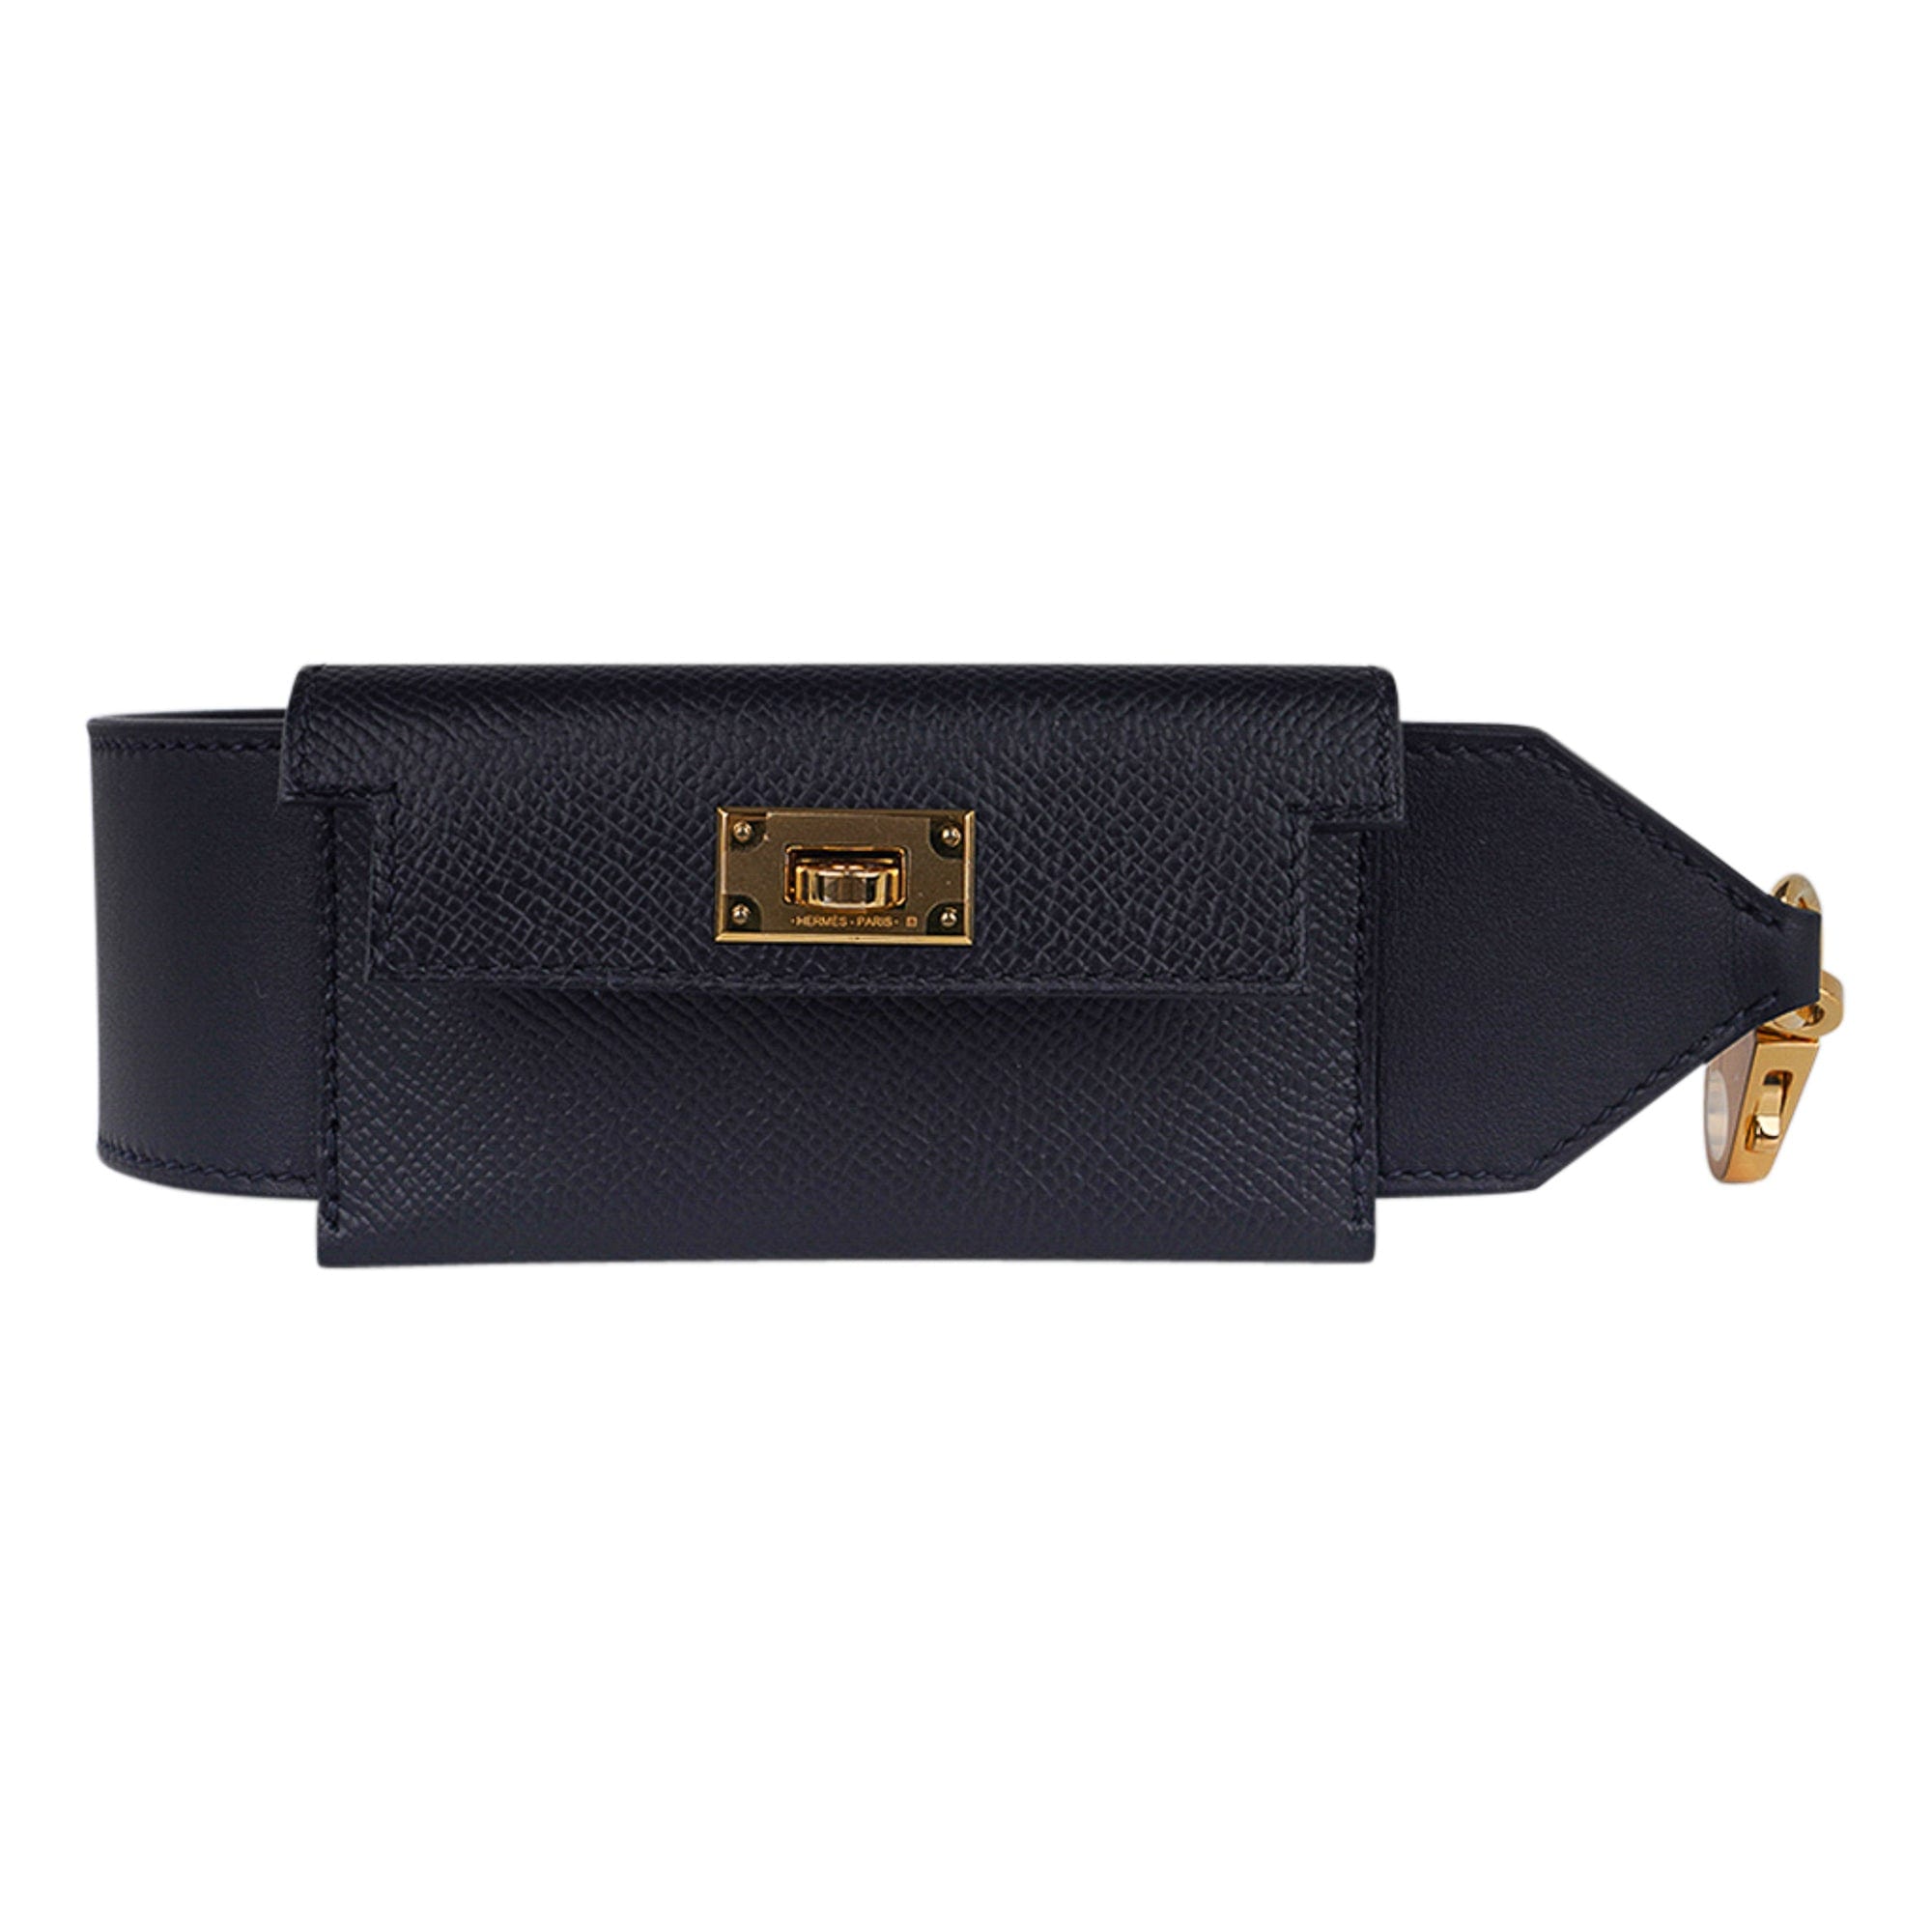 Bvprive on X: Hermes Kelly pocket bag strap 50 mm   #authentic #hermes  / X